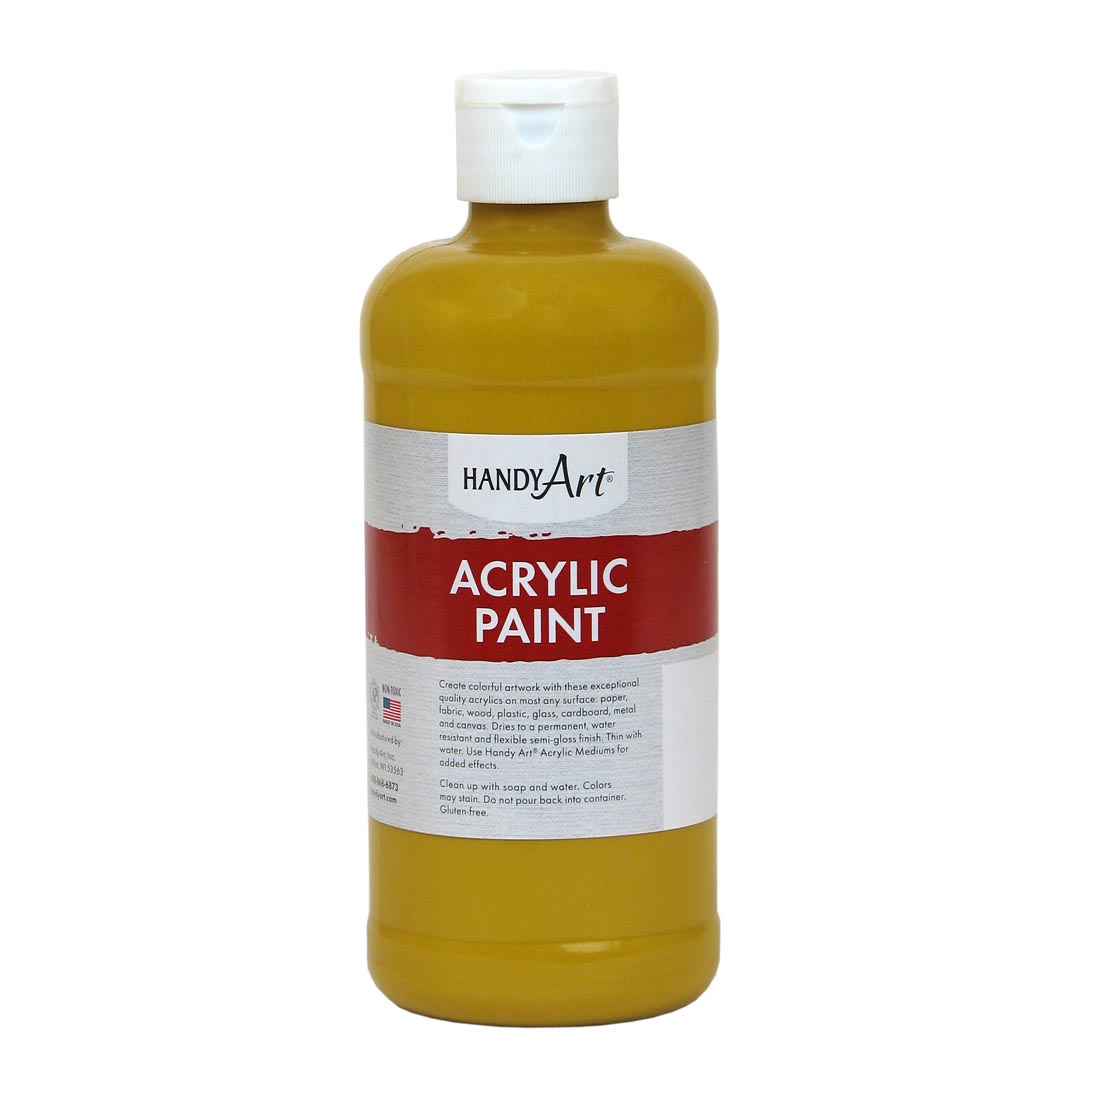 Pint Bottle of Yellow Oxide Handy Art Acrylic Paint